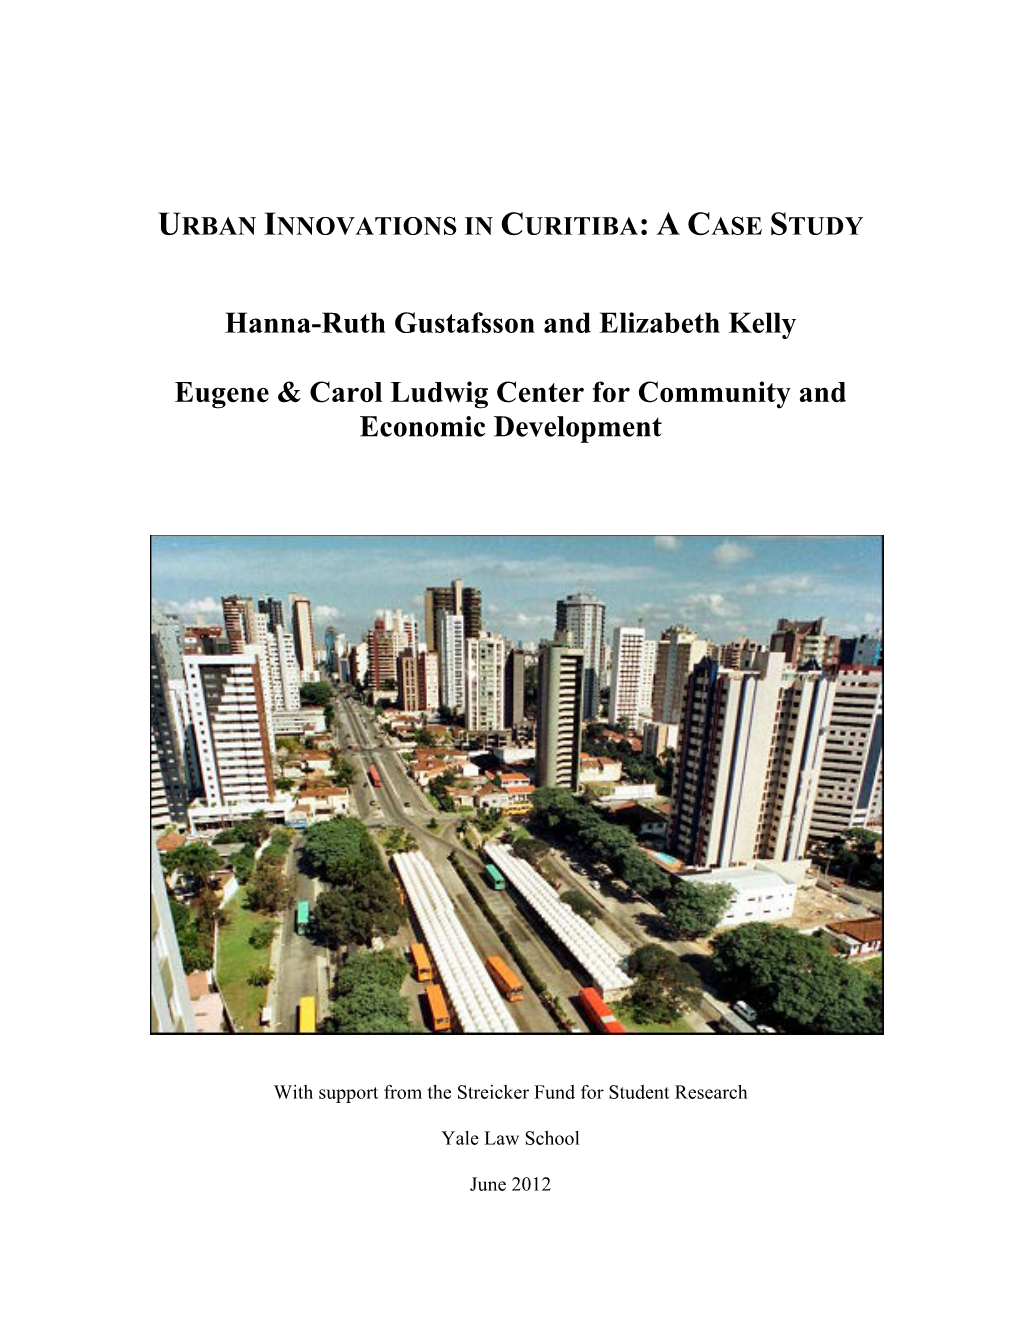 curitiba brazil case study